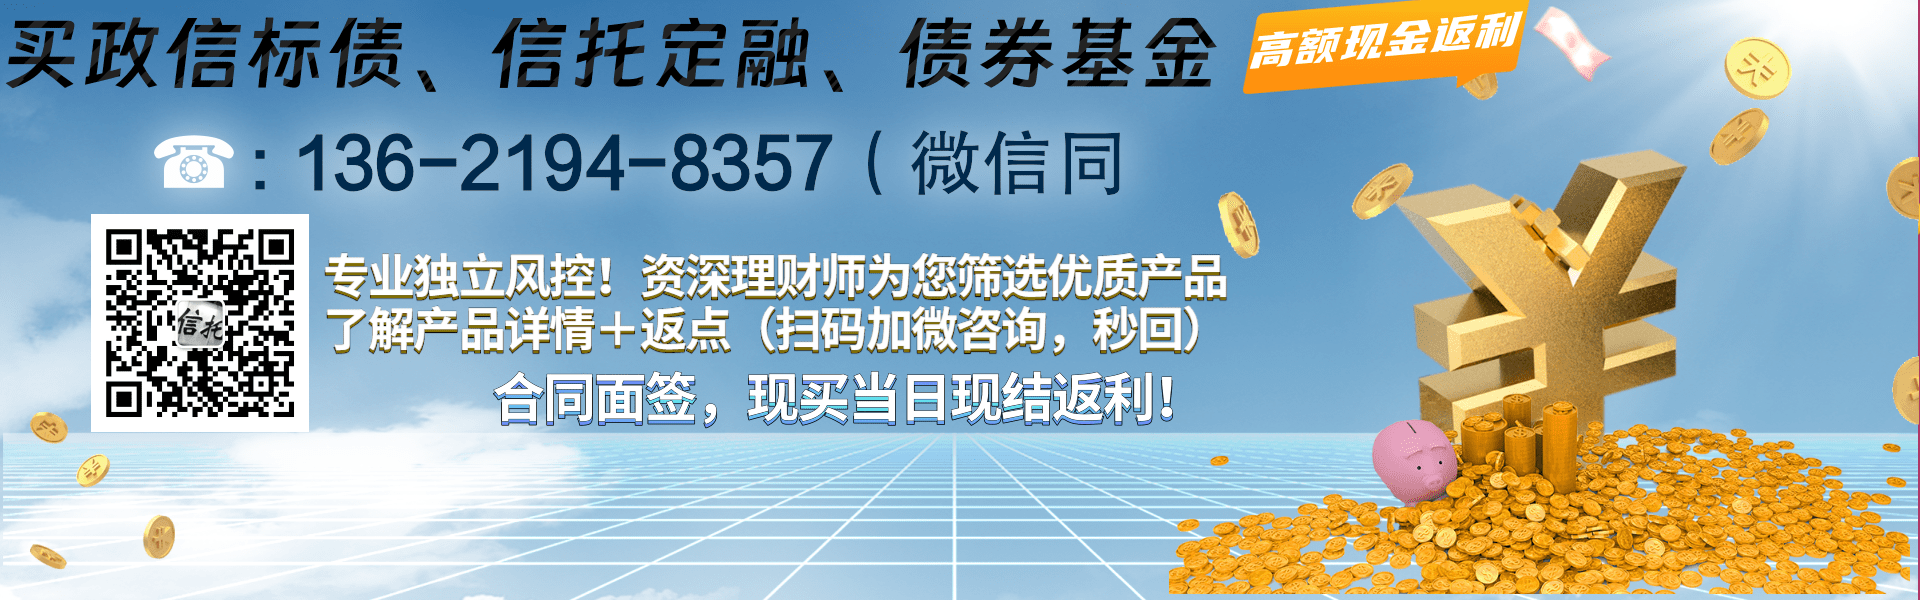 A级央企信托-625号江苏阜宁非标集合资金信托计划